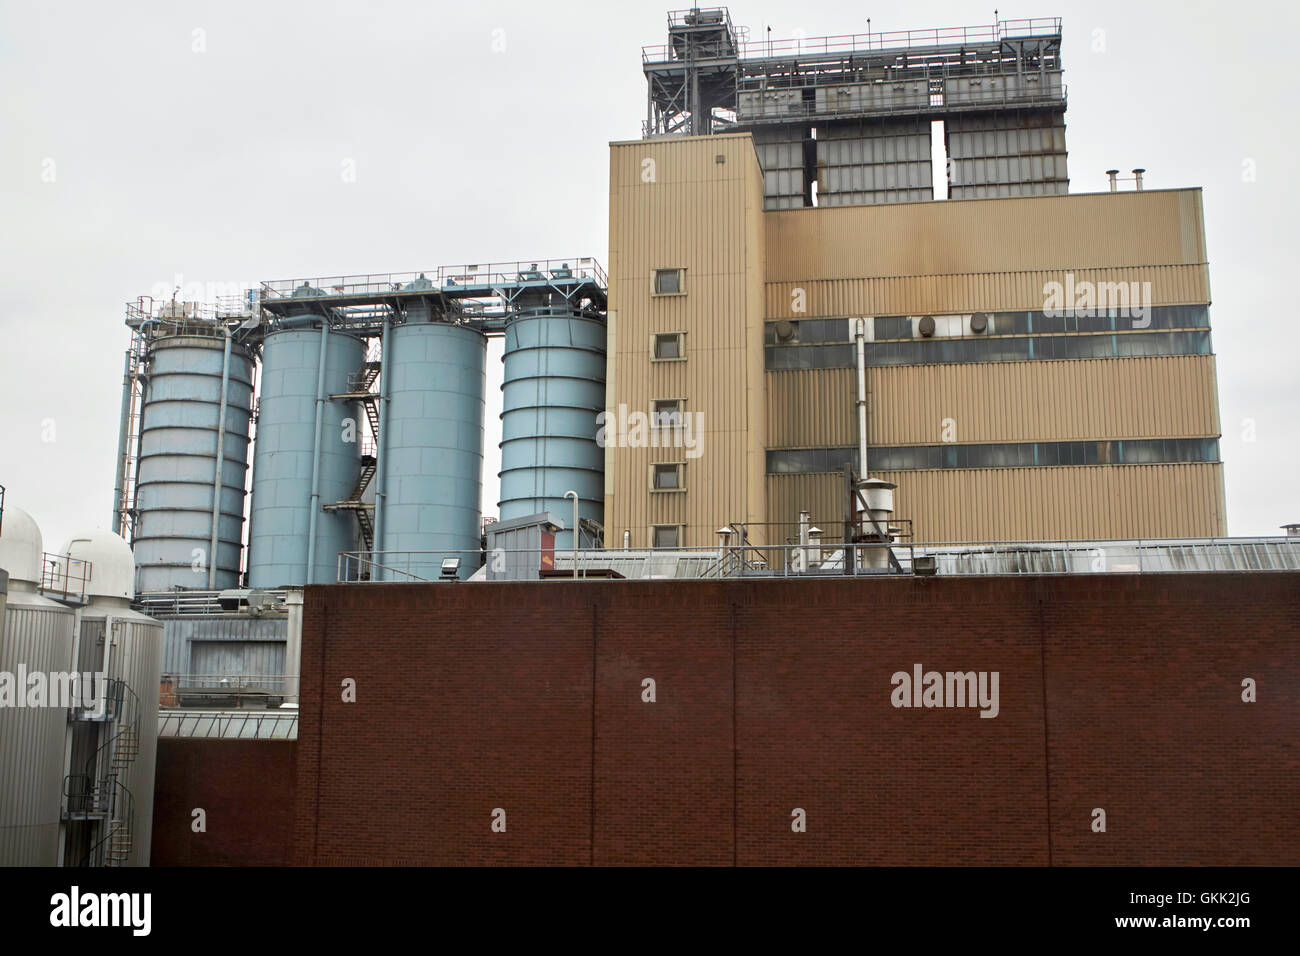 Tanques industriales y edificios de la Fábrica de Cervezas Guinness st james's Gate, Dublín Irlanda Foto de stock